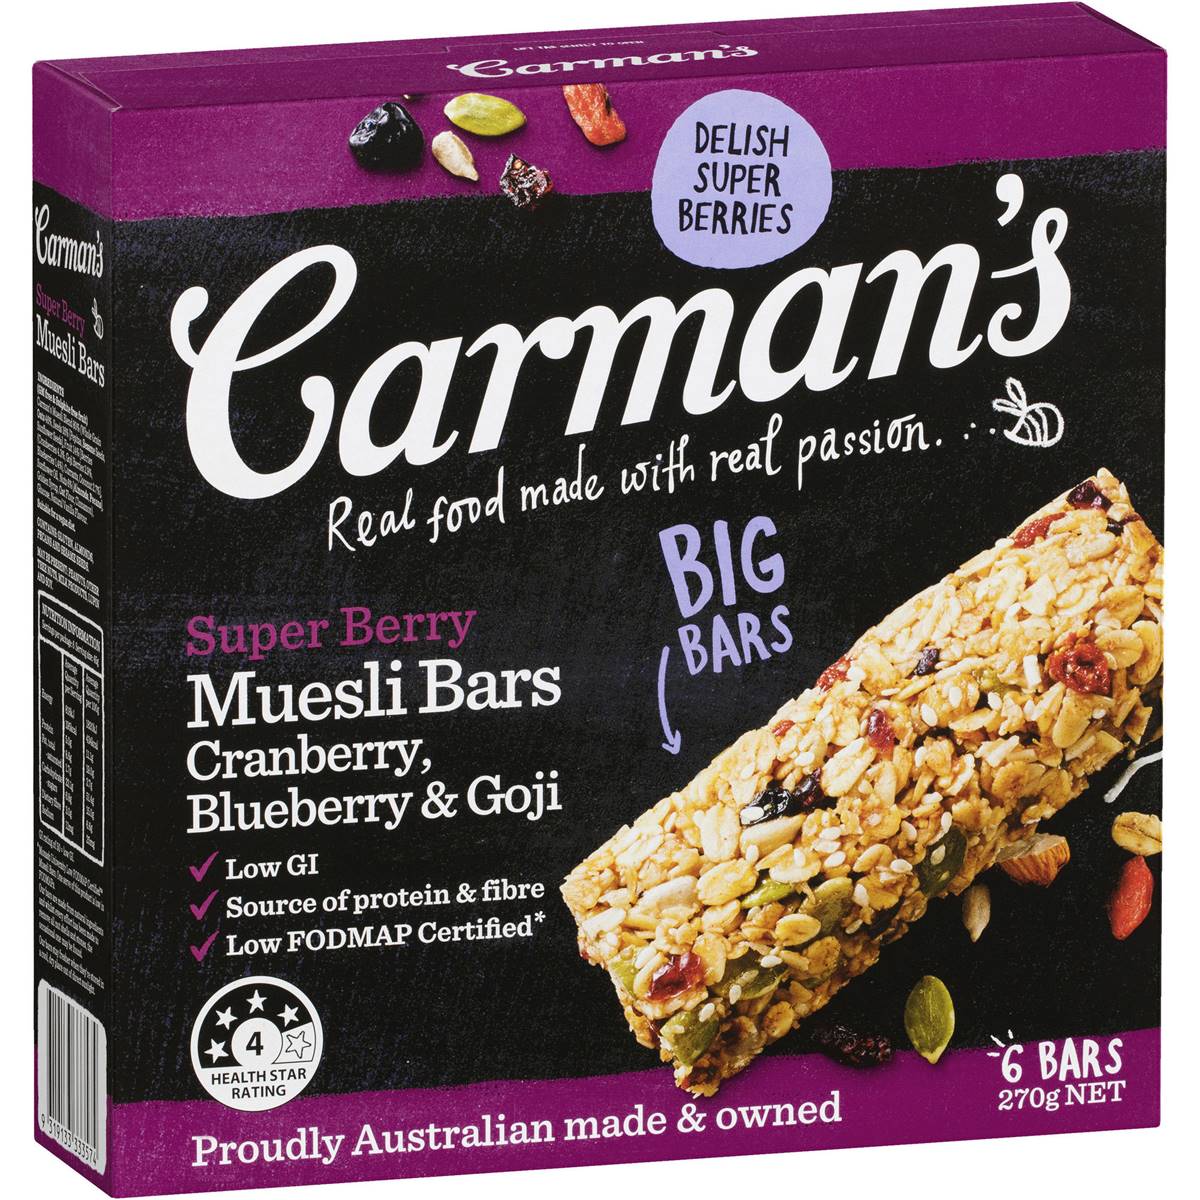 Carman's Super Berry Cranberry Blueberry & Goji Muesli Bars 6 Pack